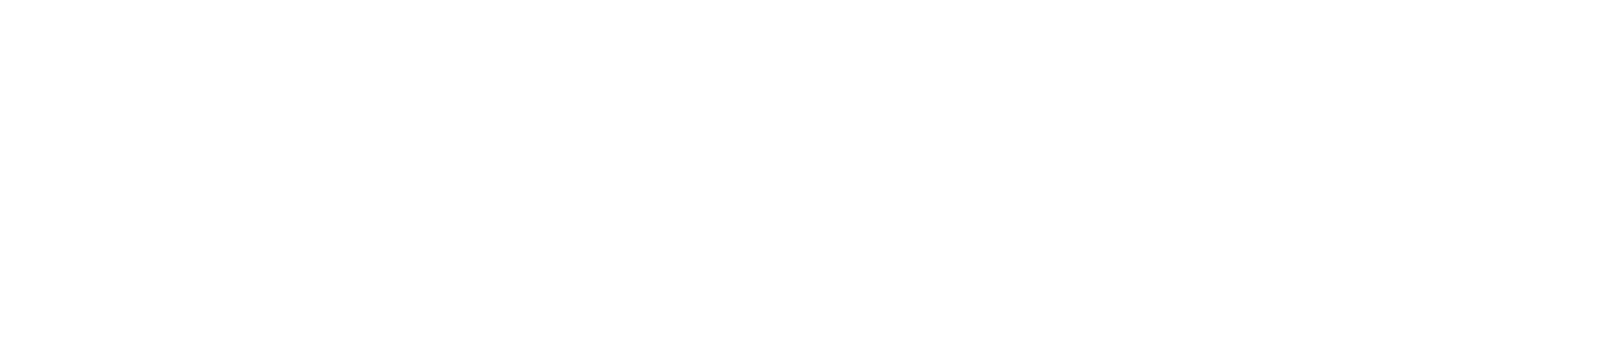 AirTAC International Logo groß für dunkle Hintergründe (transparentes PNG)